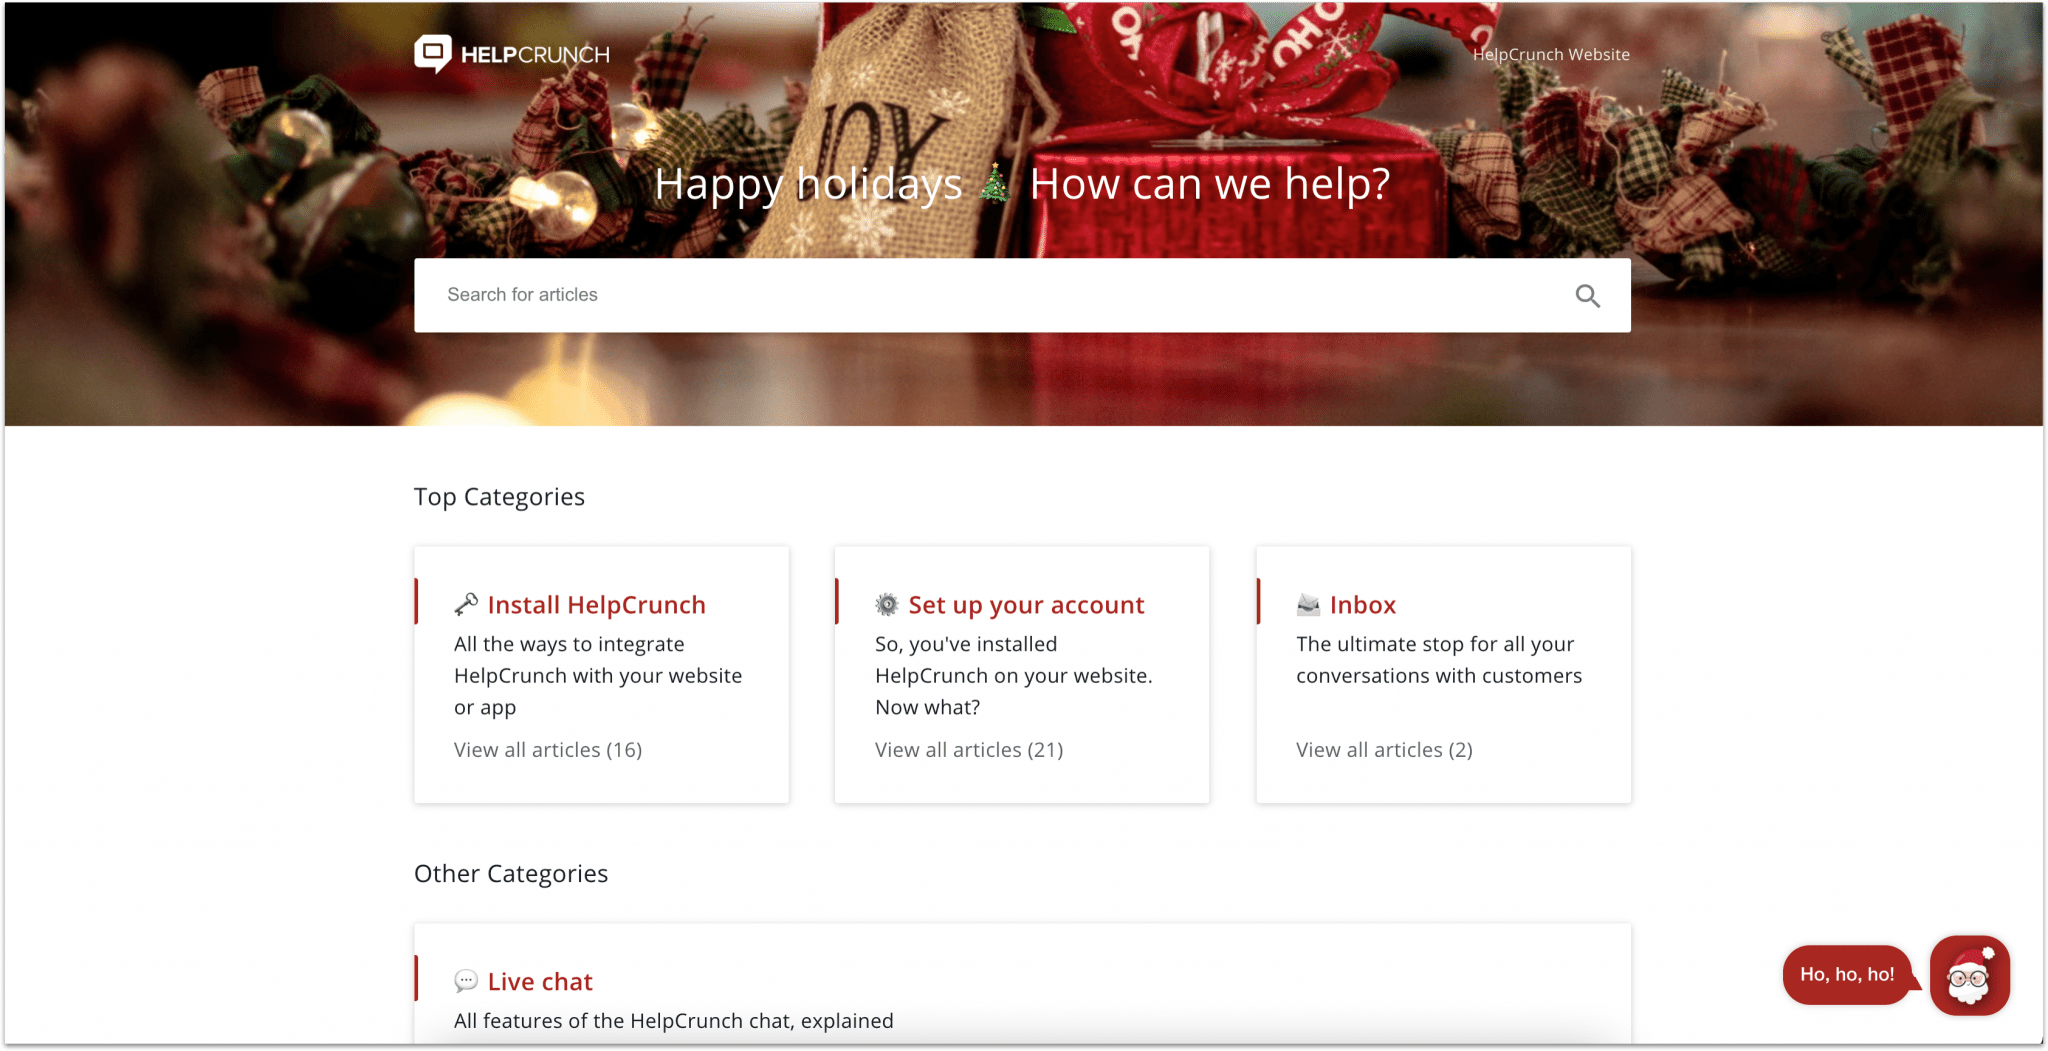 HelpCrunch-knowledge-base-Christmas-theme